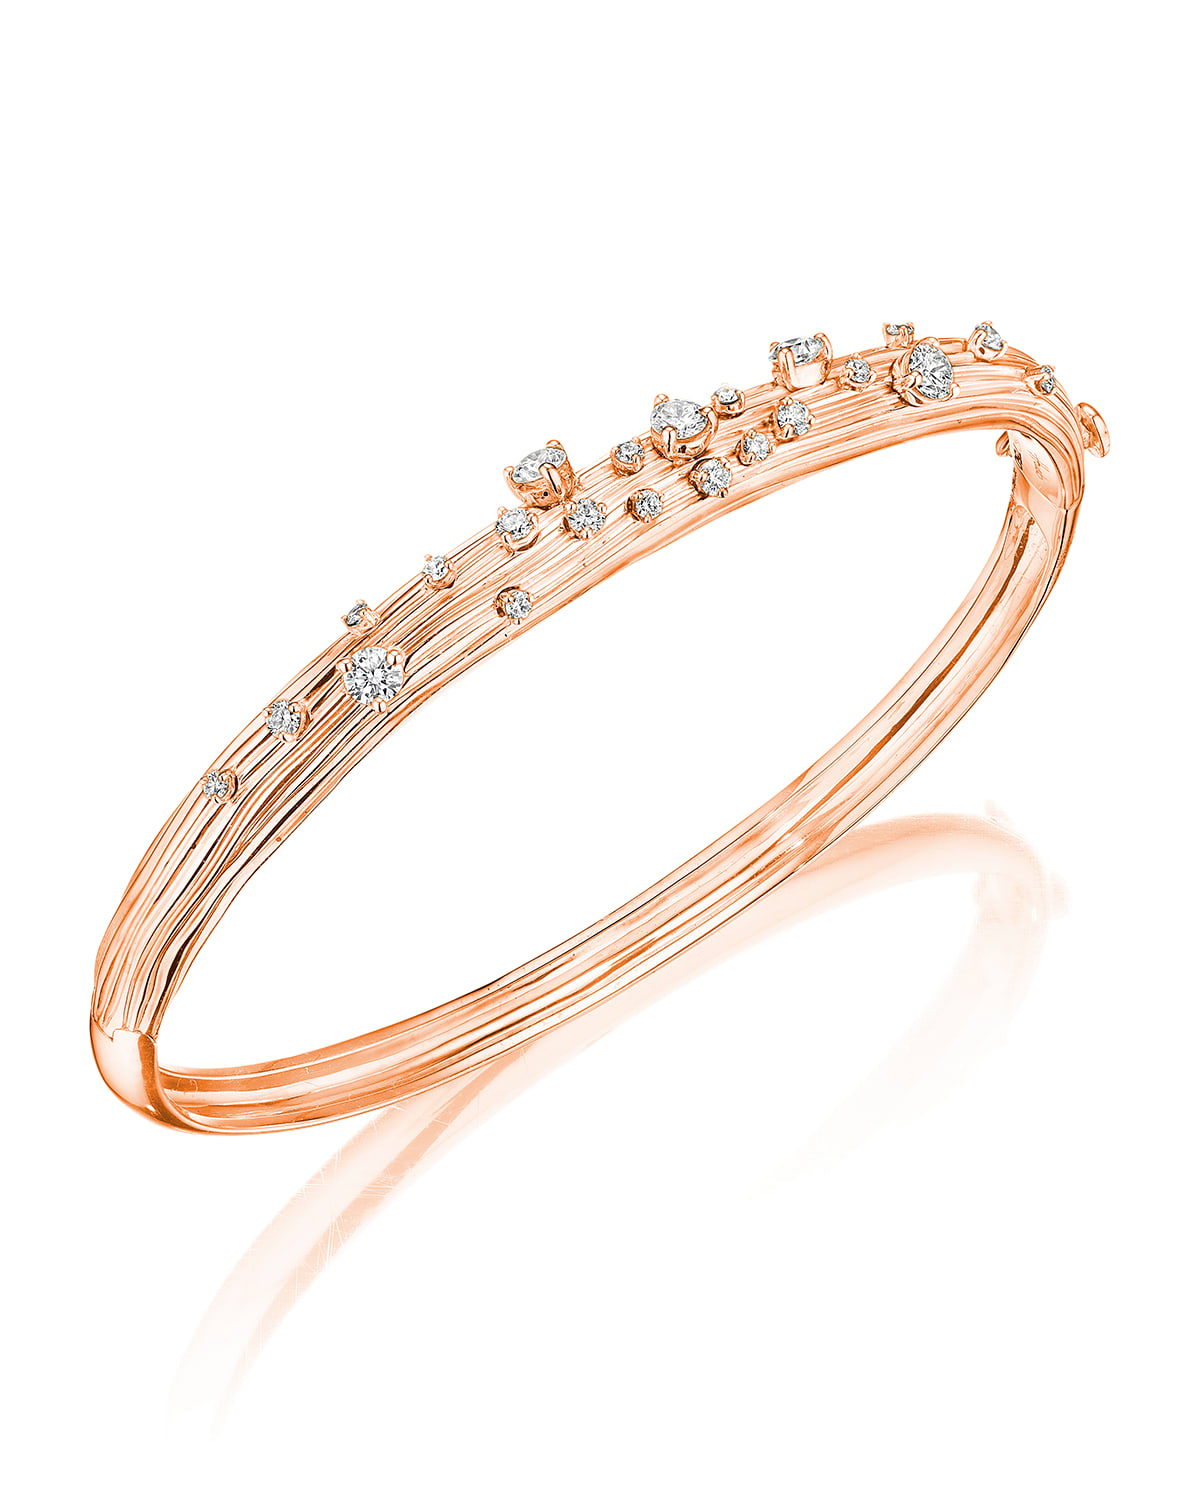 Bahia 18k Pink Gold Diamond Bangle Bracelet